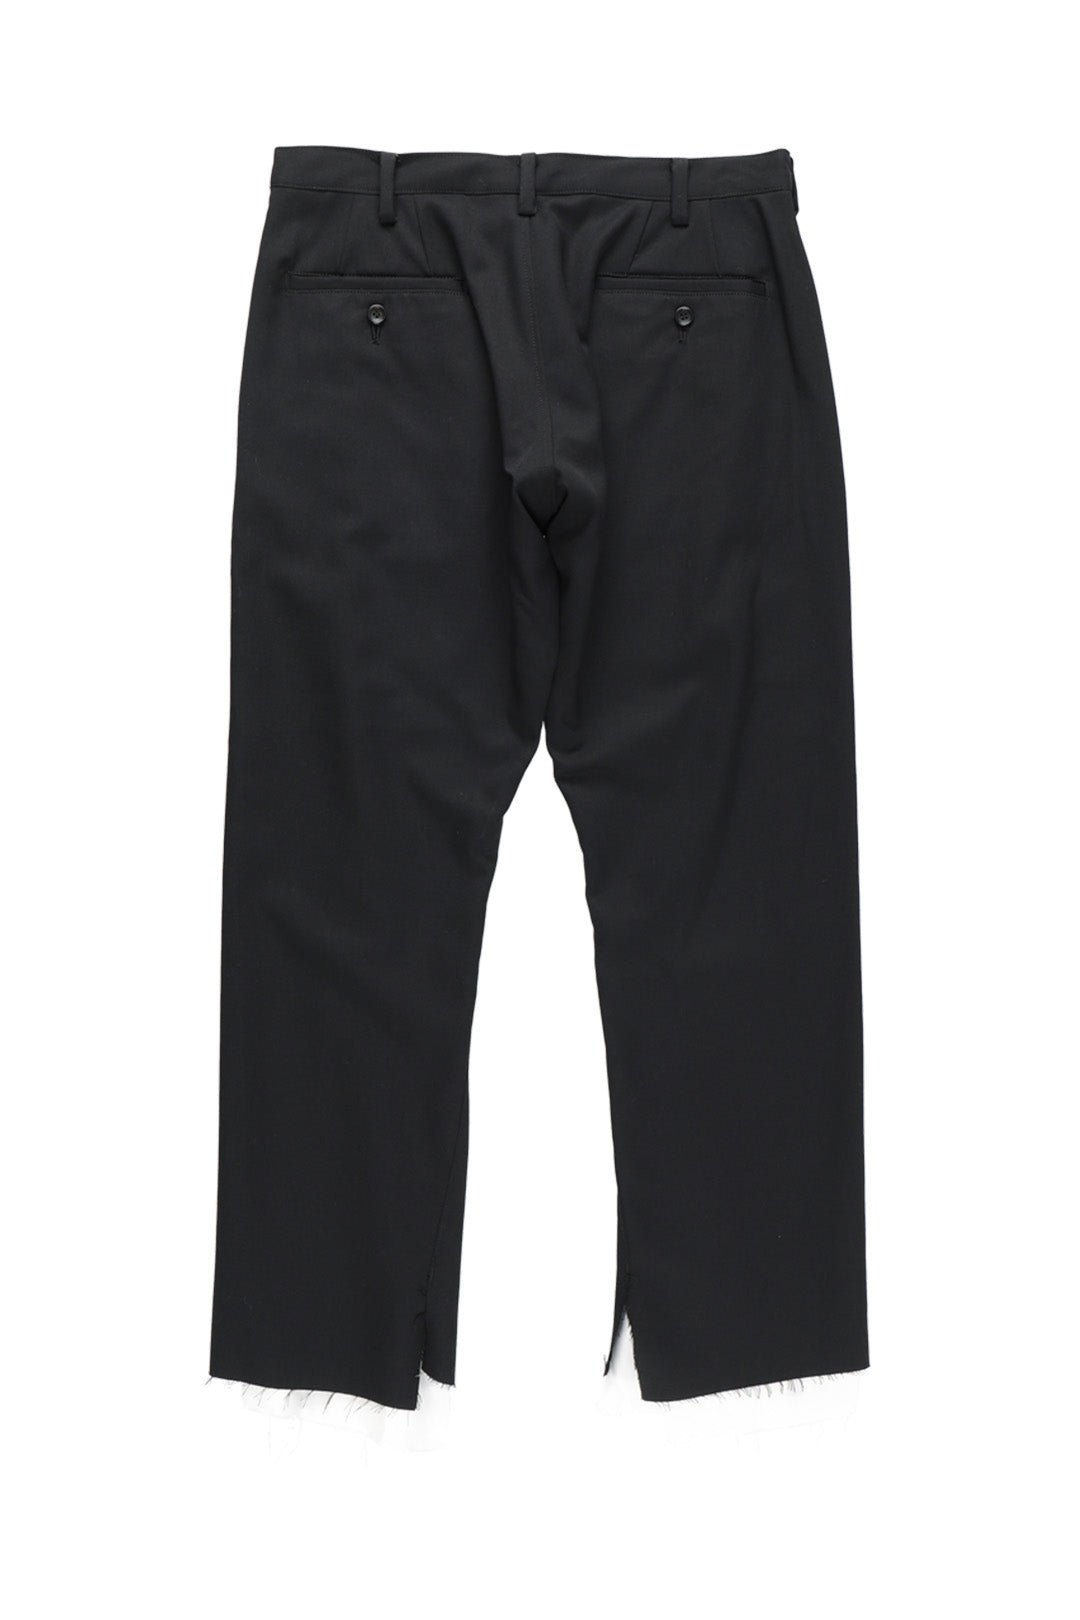 sulvam Classic slim pants black AW22 | sulvam online store